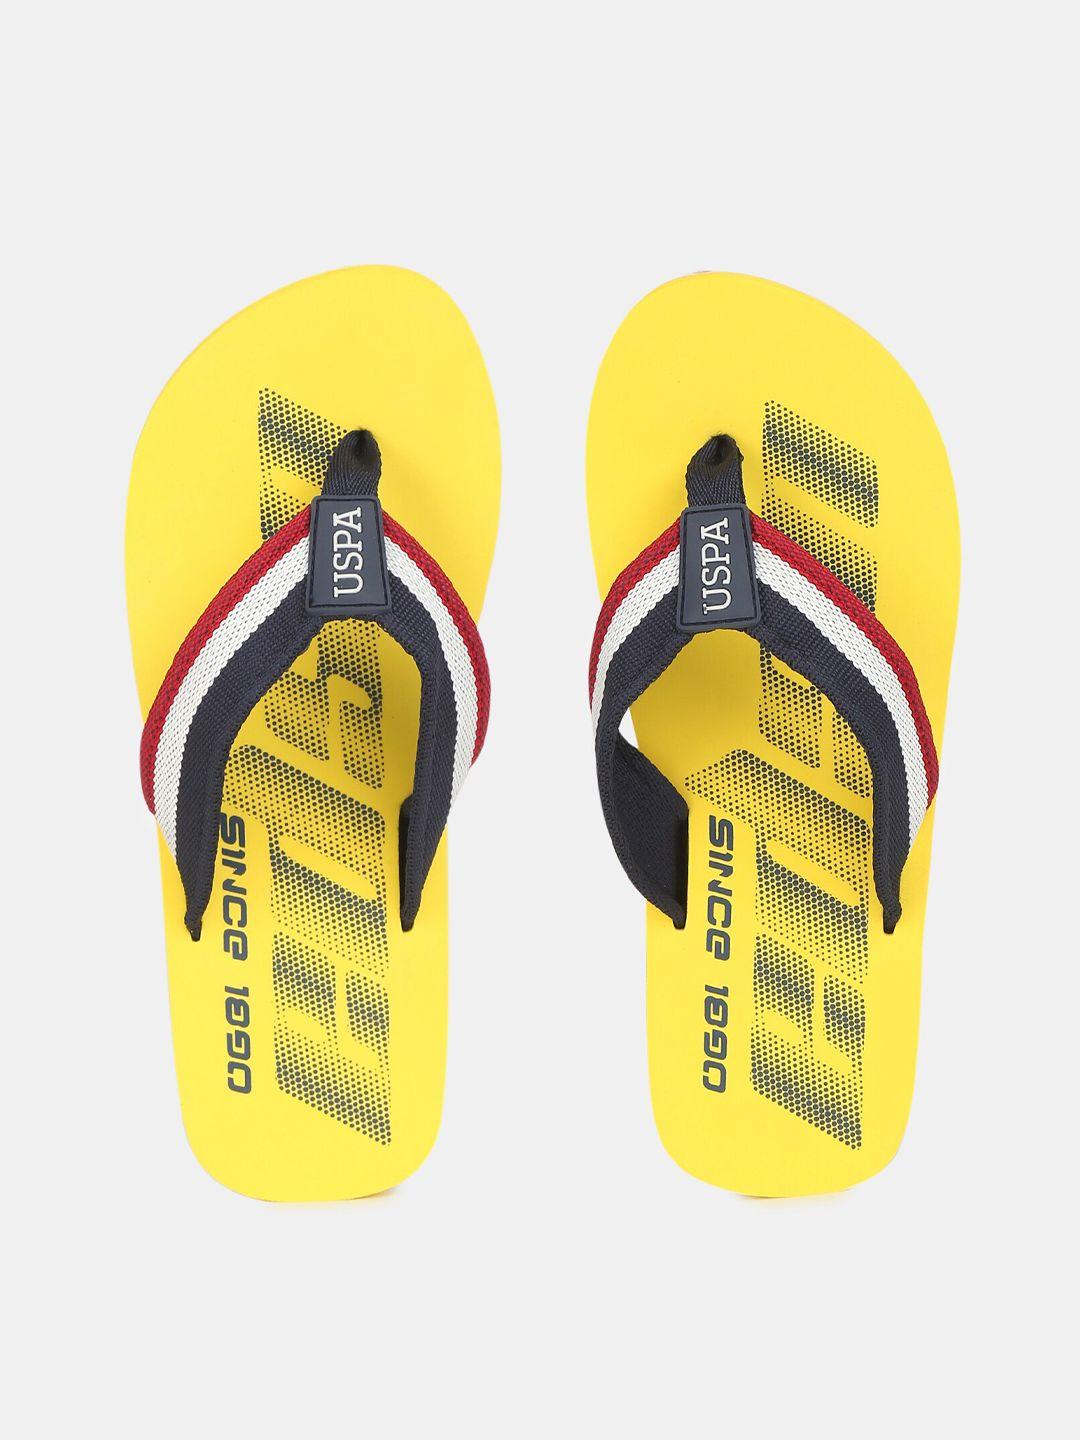 u-s-polo-assn-men-yellow-&-white-printed-thong-flip-flops